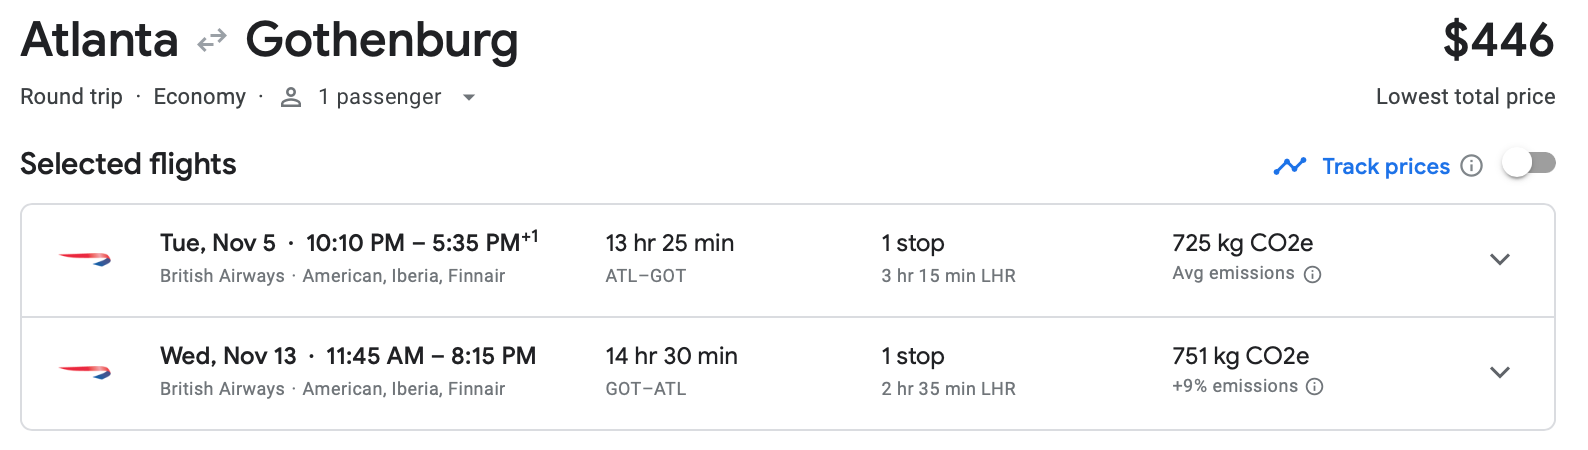 Google Flights estimate for roundtrip flight from Atlanta to Gothenburg